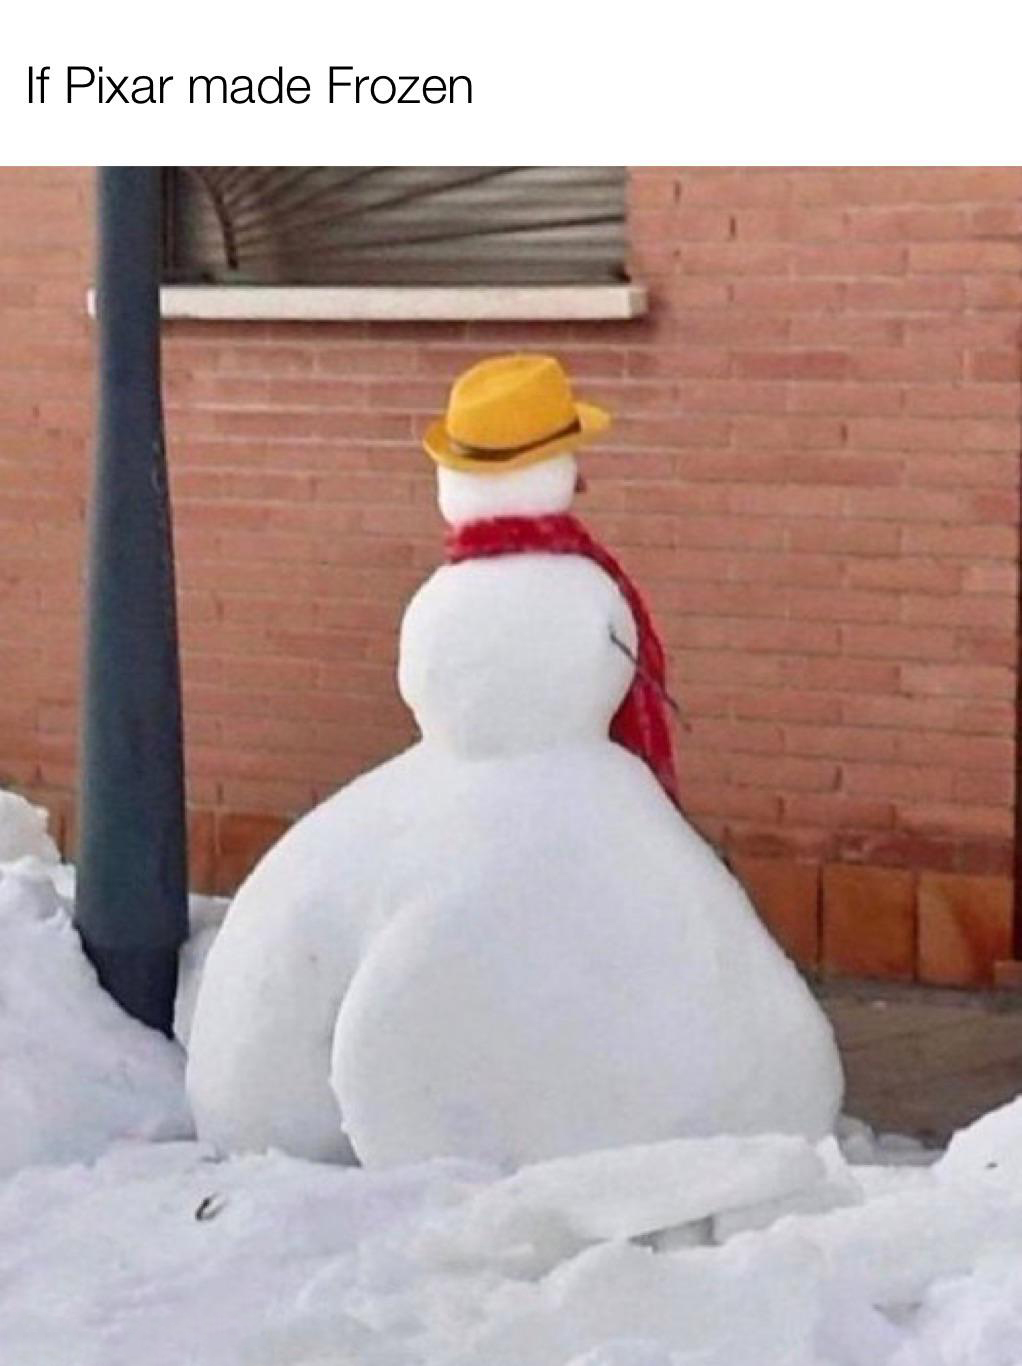 monday morning randomness - snowman memes - If Pixar made Frozen